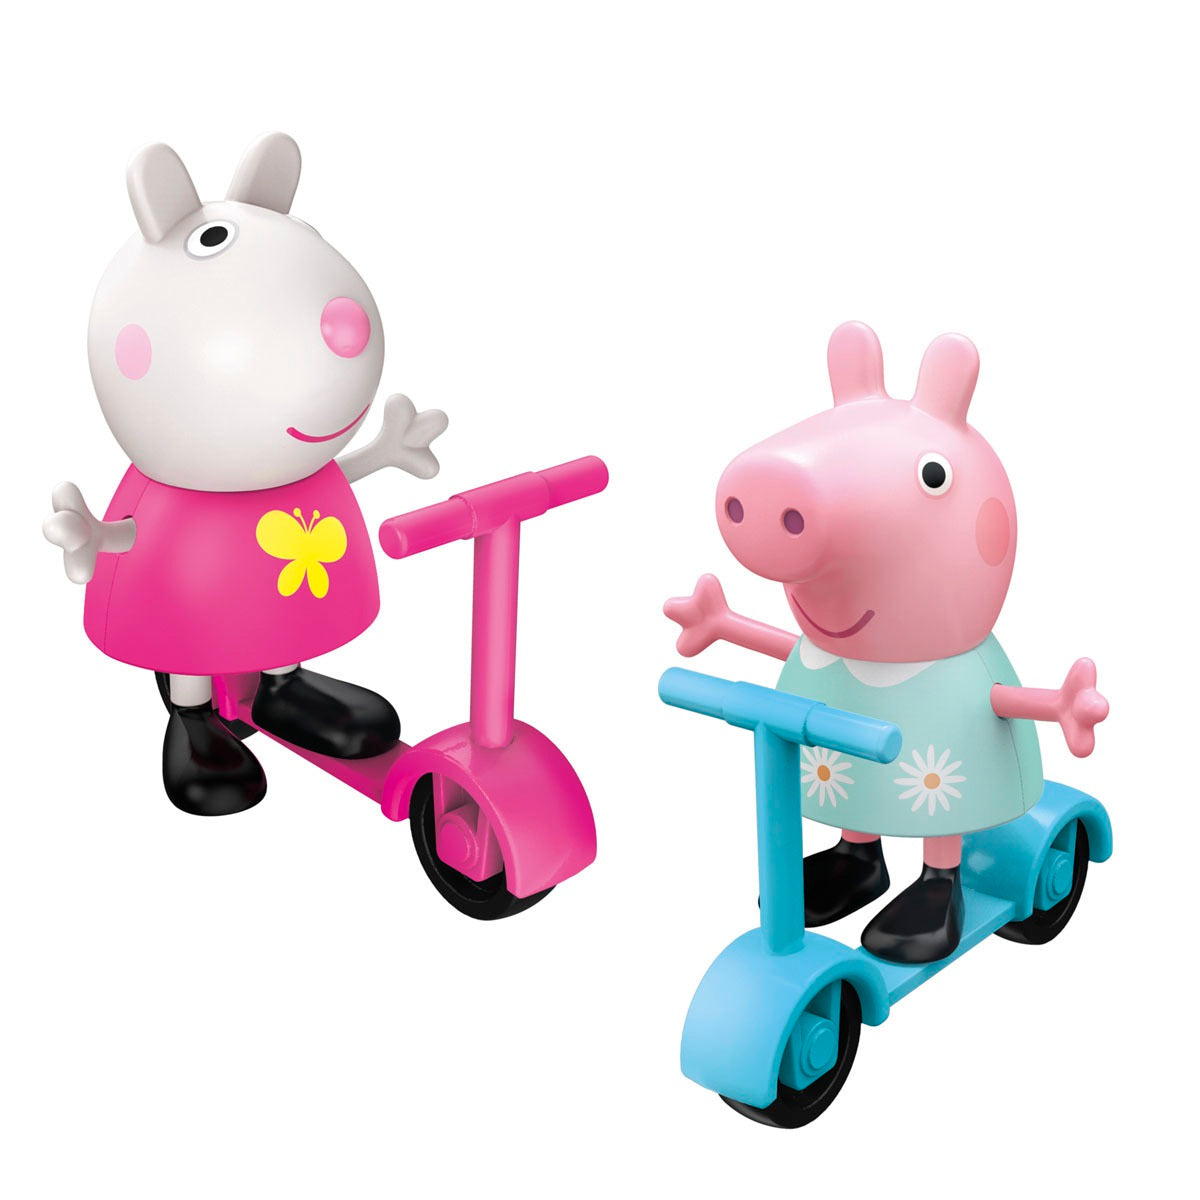 Peppa Pig: Peppa's Adventures - Peppa’s Picnic Playset Toy